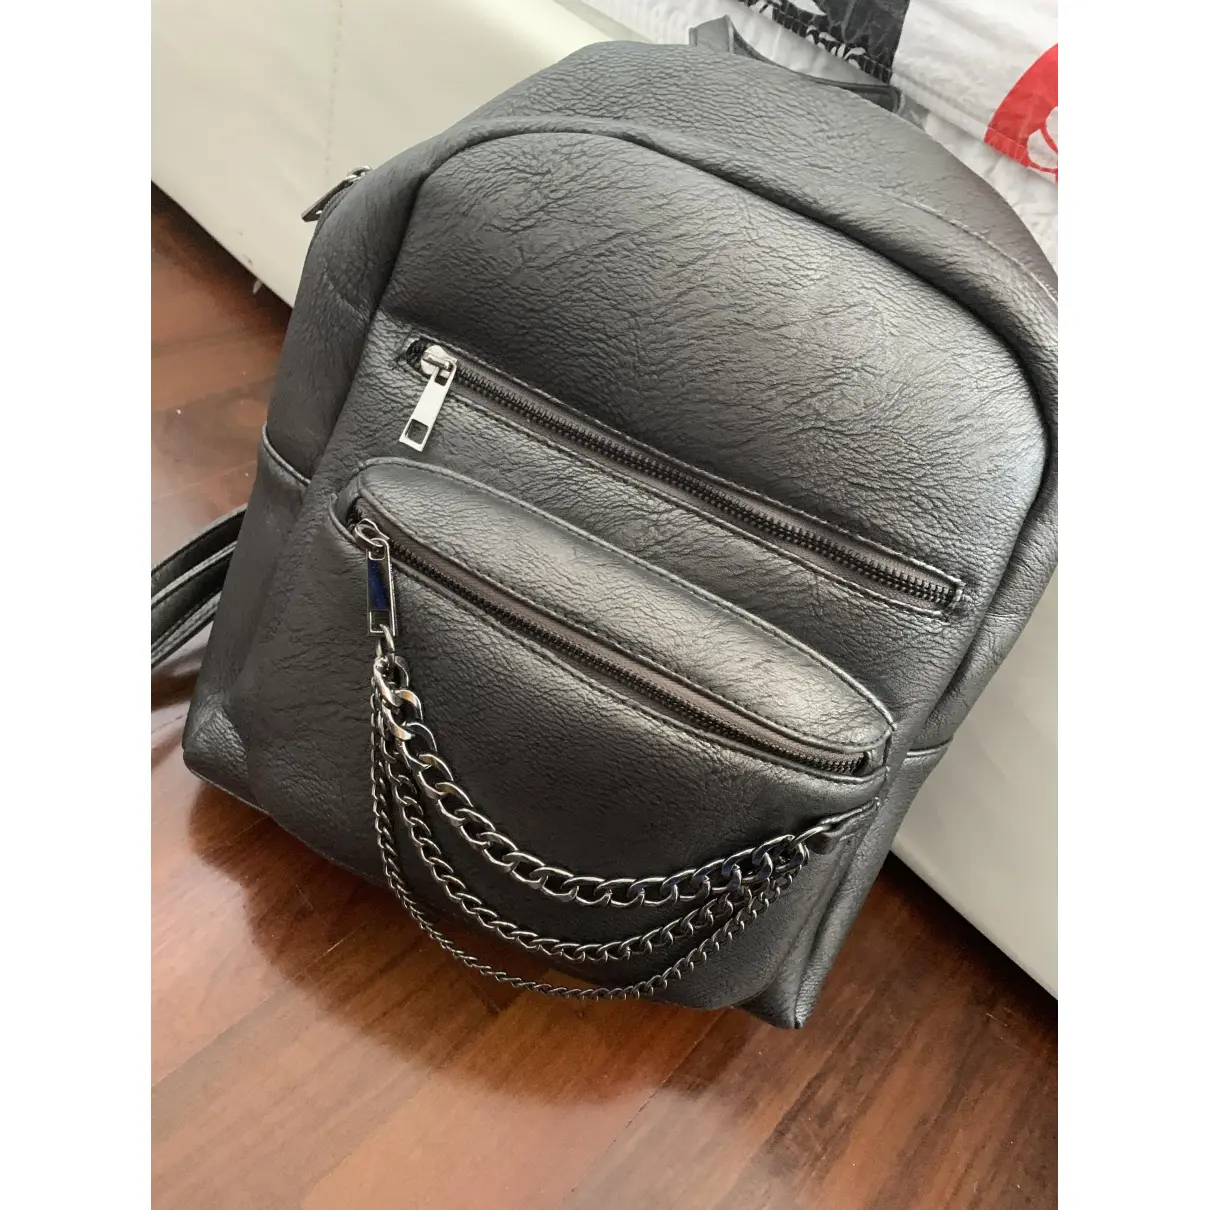 Buy Mavi Leather backpack online